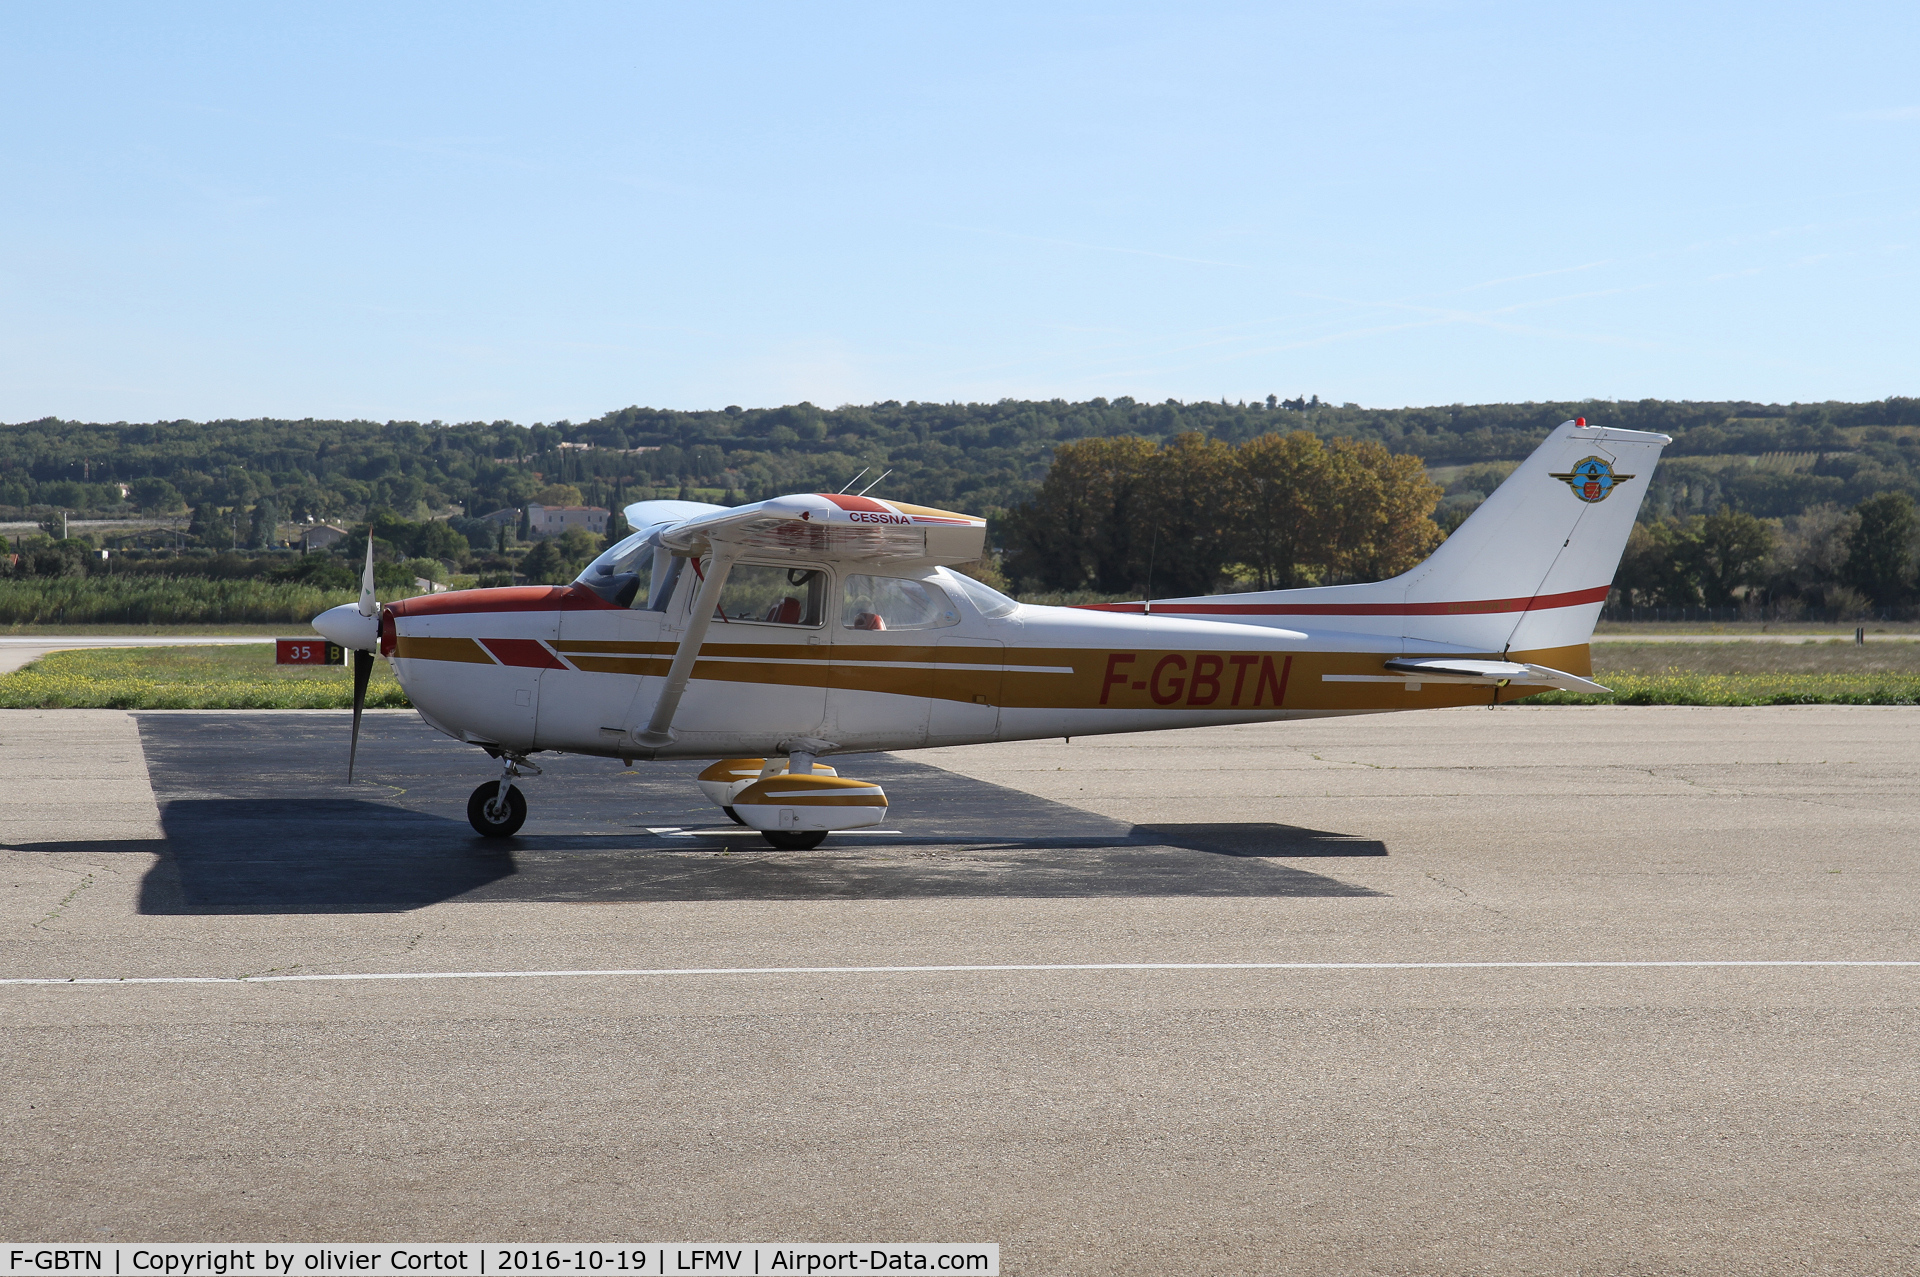 F-GBTN, Reims F172N Skyhawk C/N 1834, on the tarmac of Avignon airport